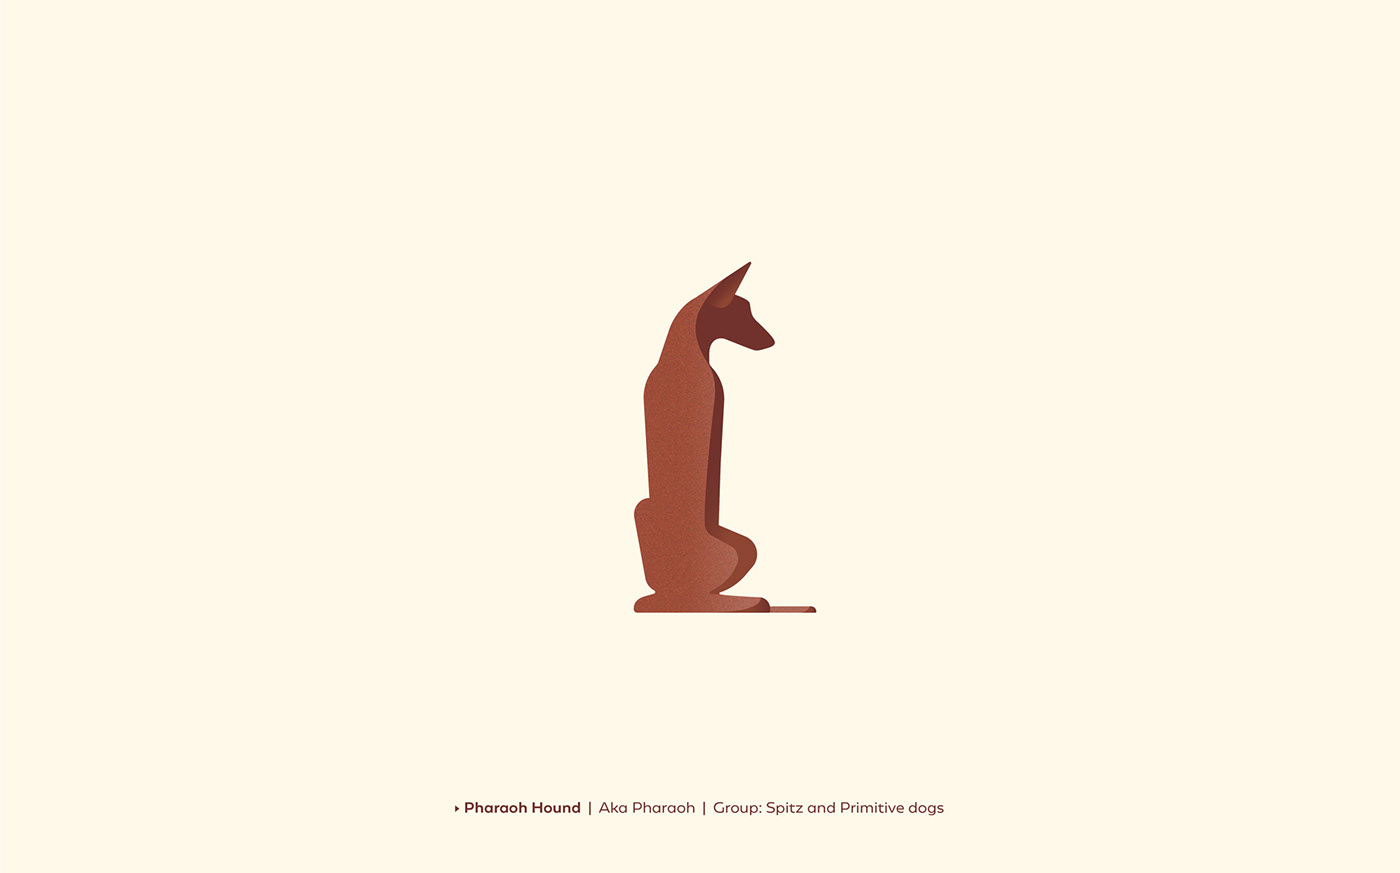 Collection dachshund dog greyhound logofolio pets ILLUSTRATION  logo puppy